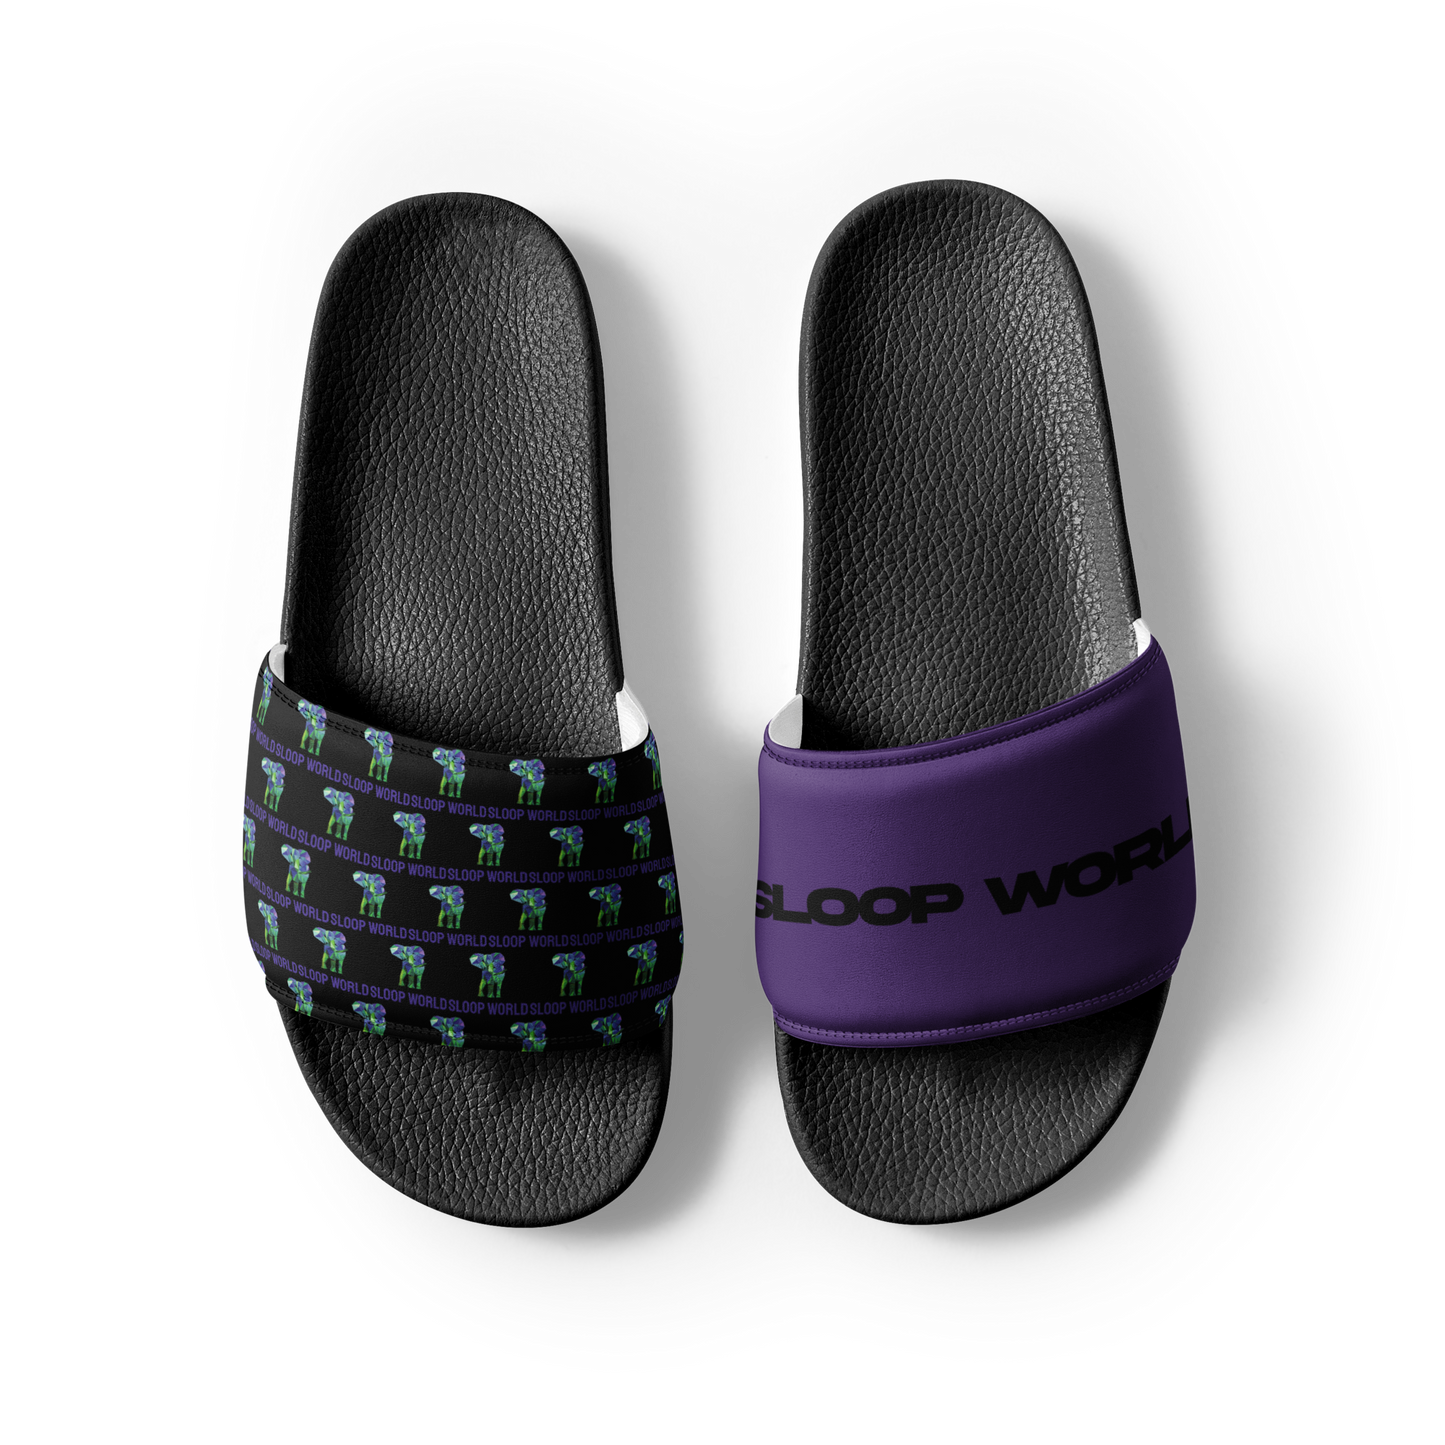 Sloop World 2 Way Slides